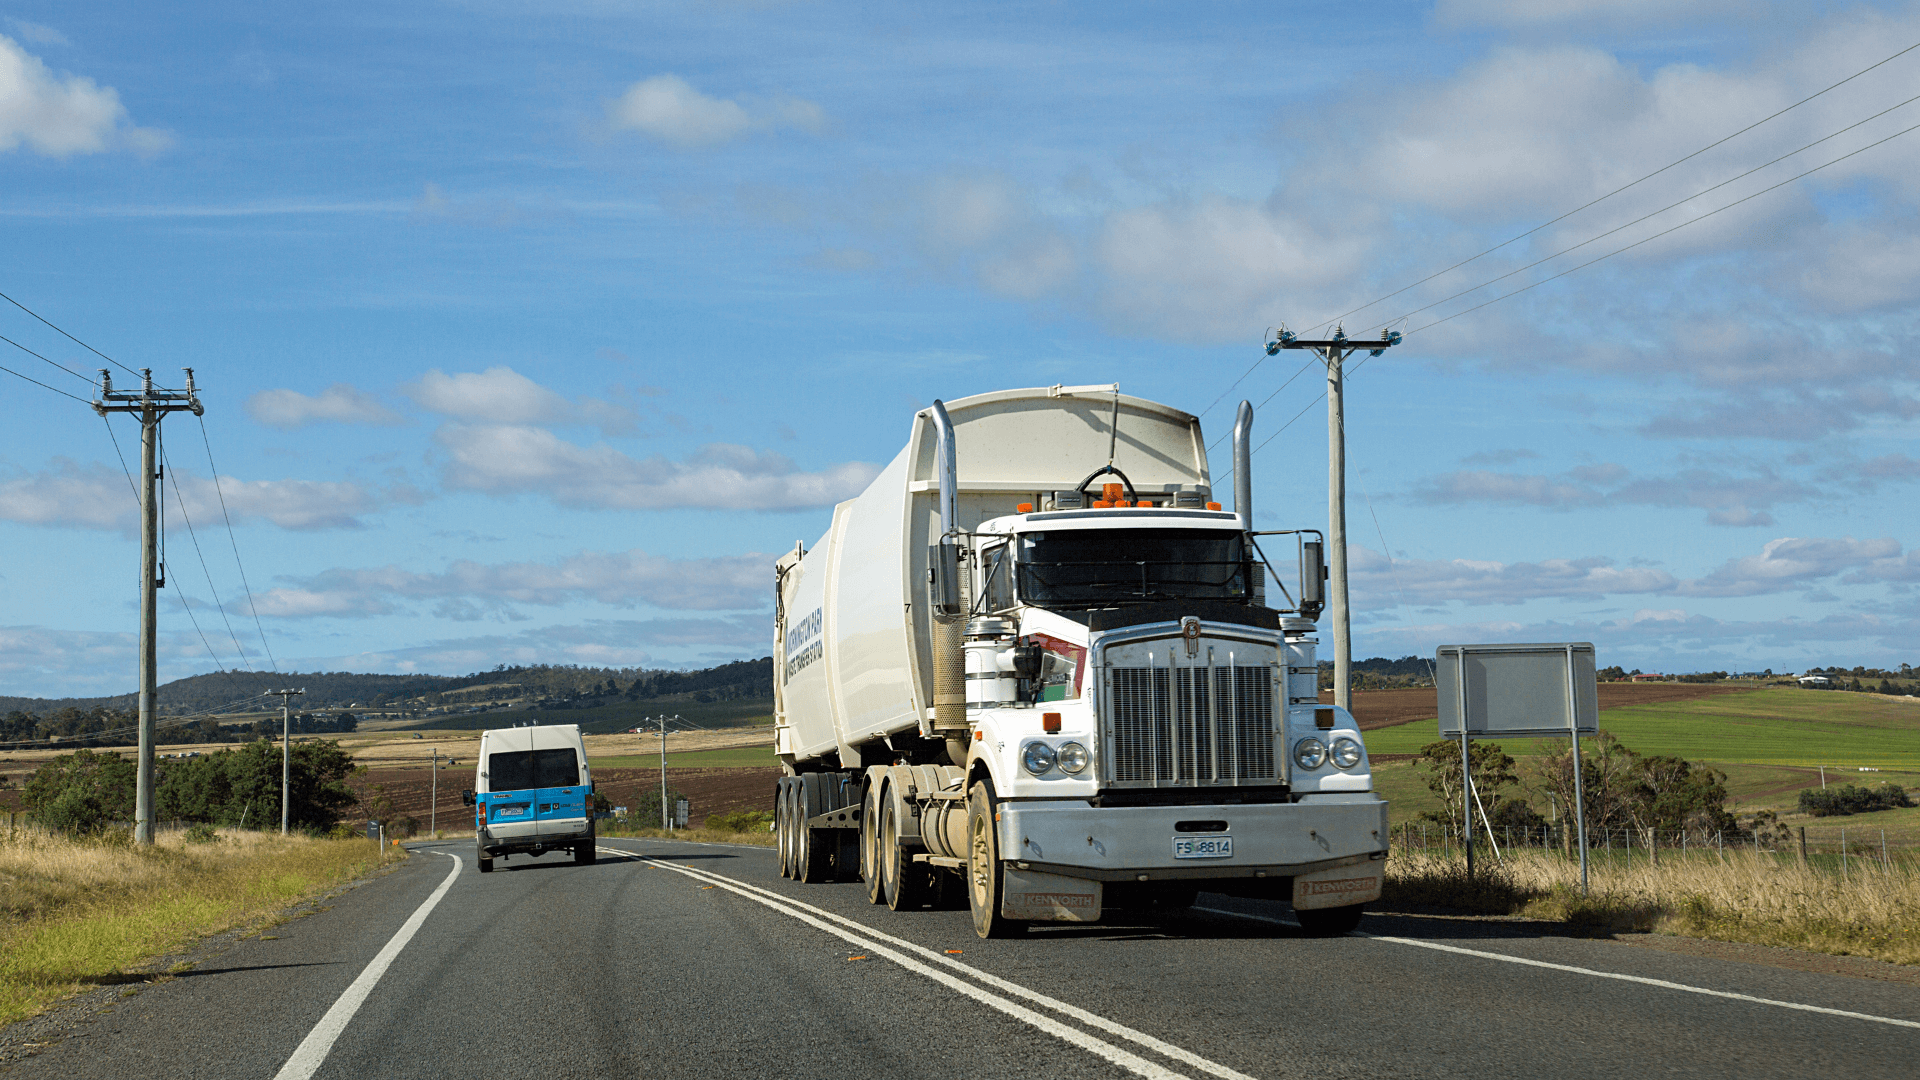 Truck driving near poles